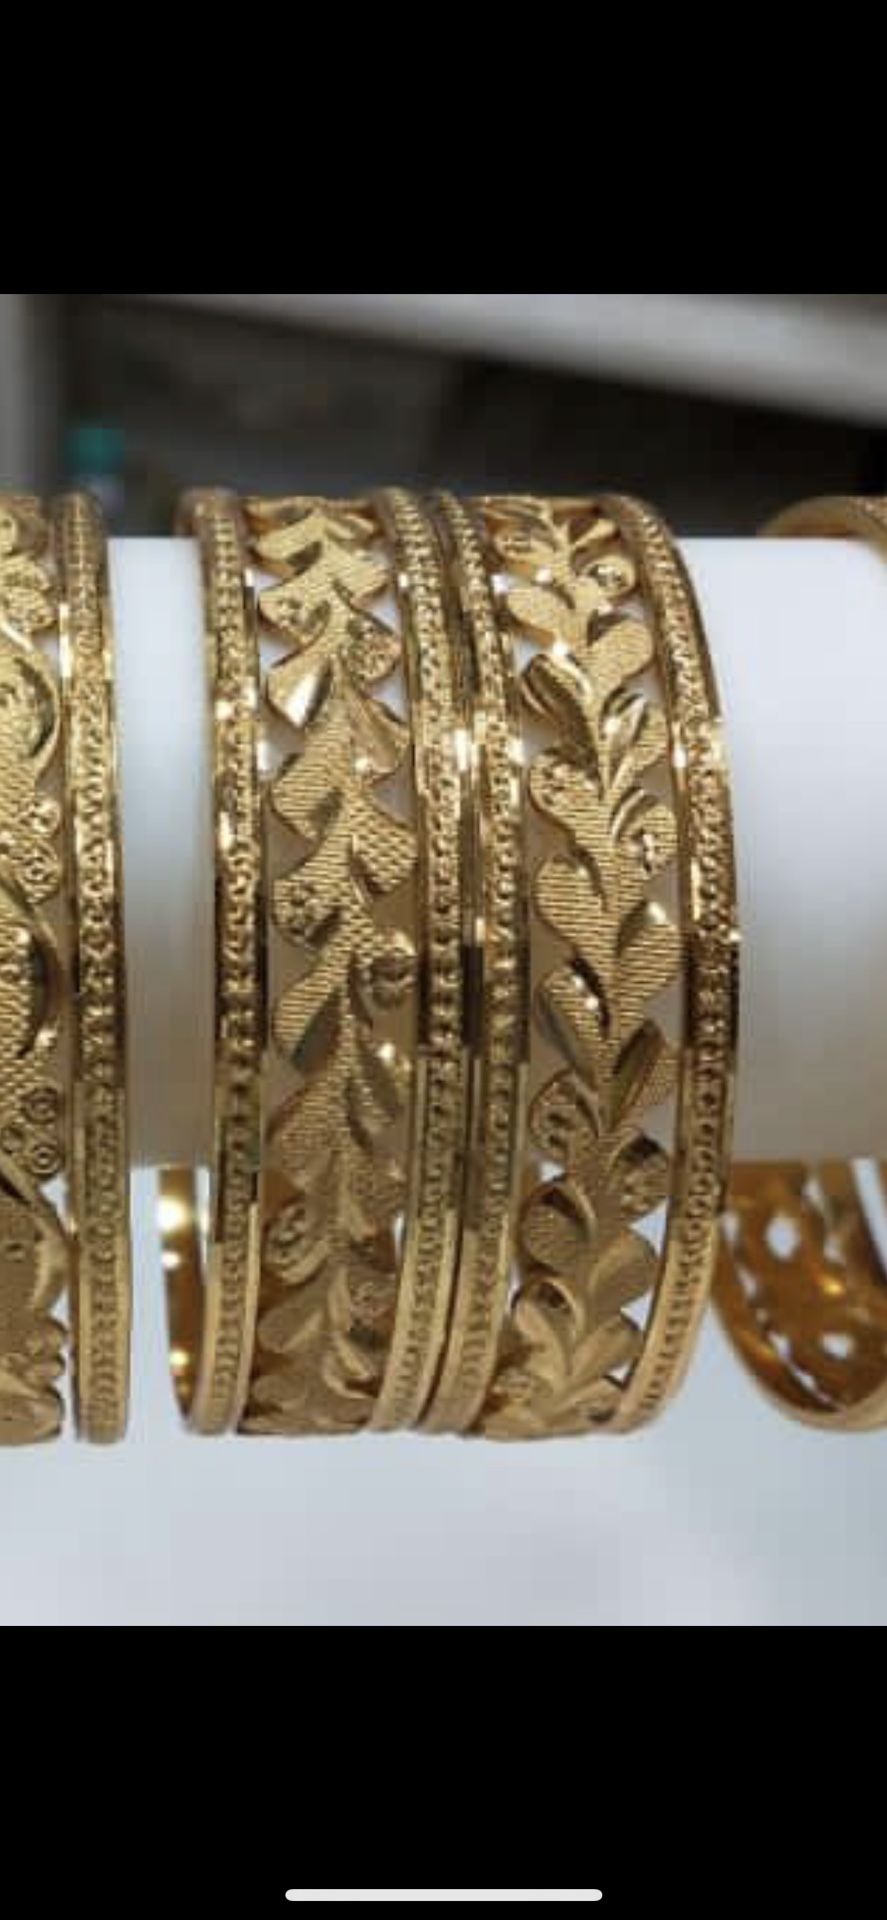 22k Gold Plated Indian Bollywood Pakistani Bangles Bracelet Set Women’s Jewelry Size 2-4 2-8 Available 